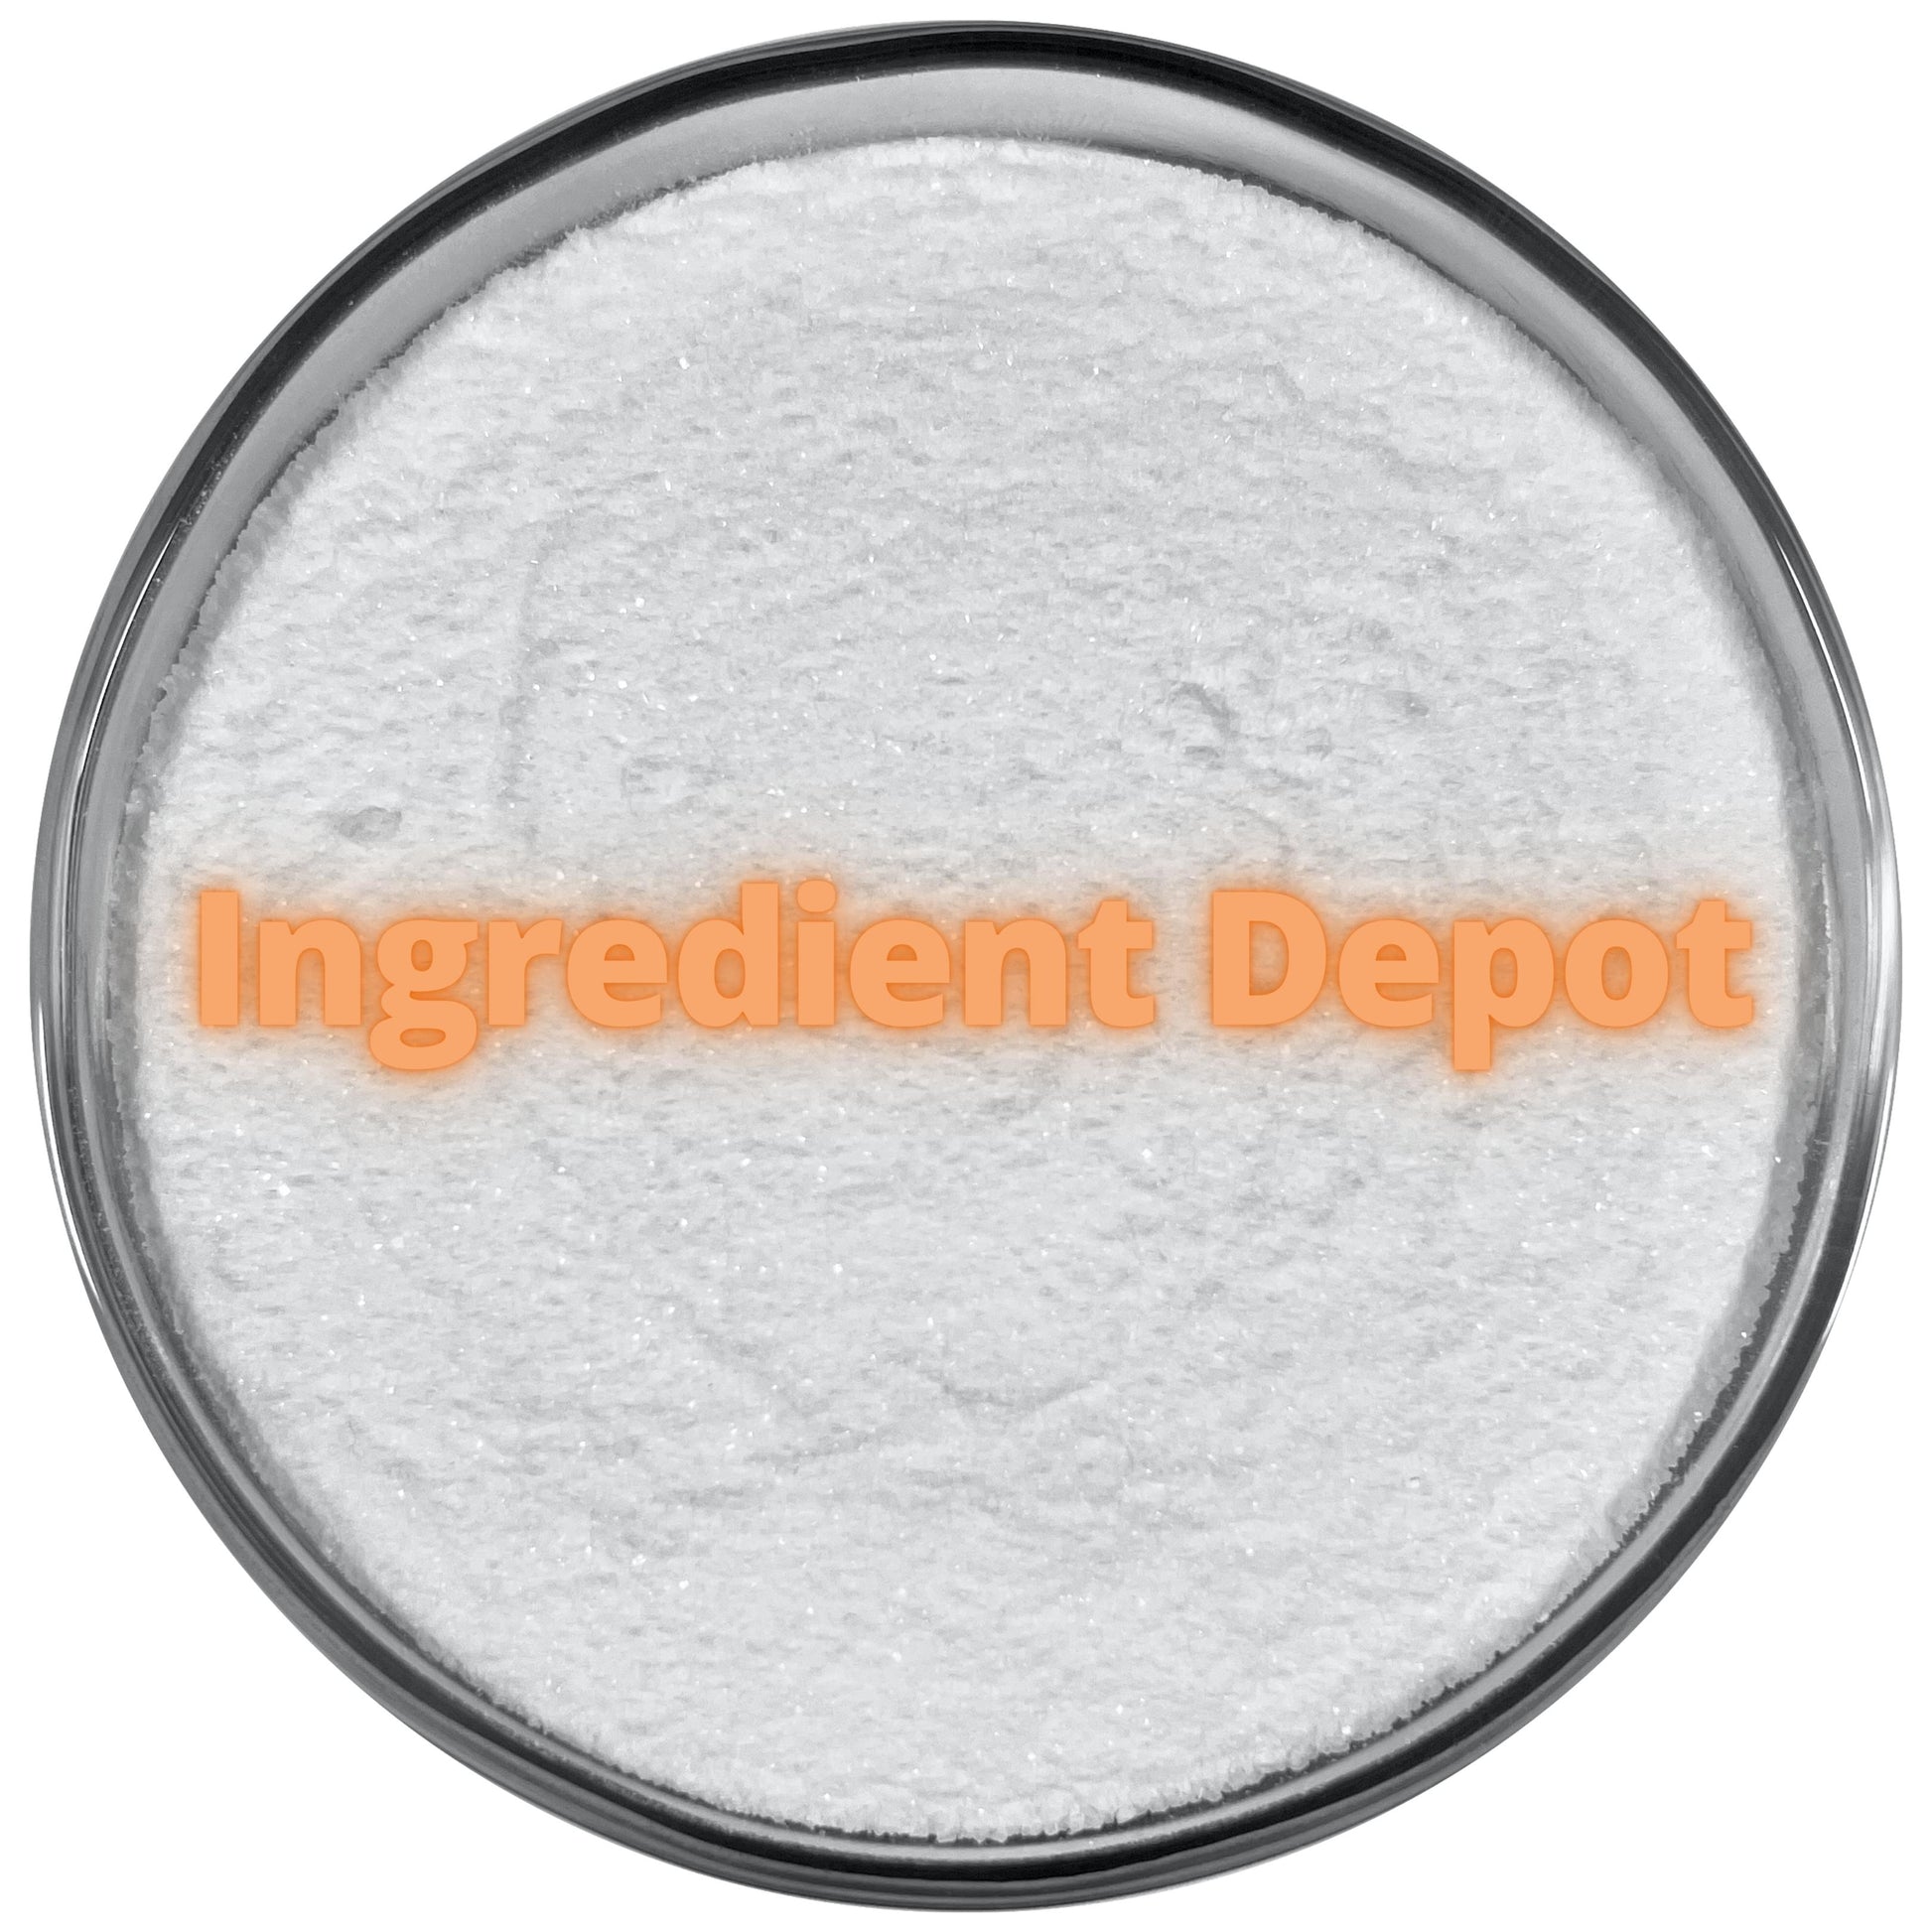 Ascorbic Acid (Vitamin C), Food and USP Grade 1 kg - IngredientDepot.com